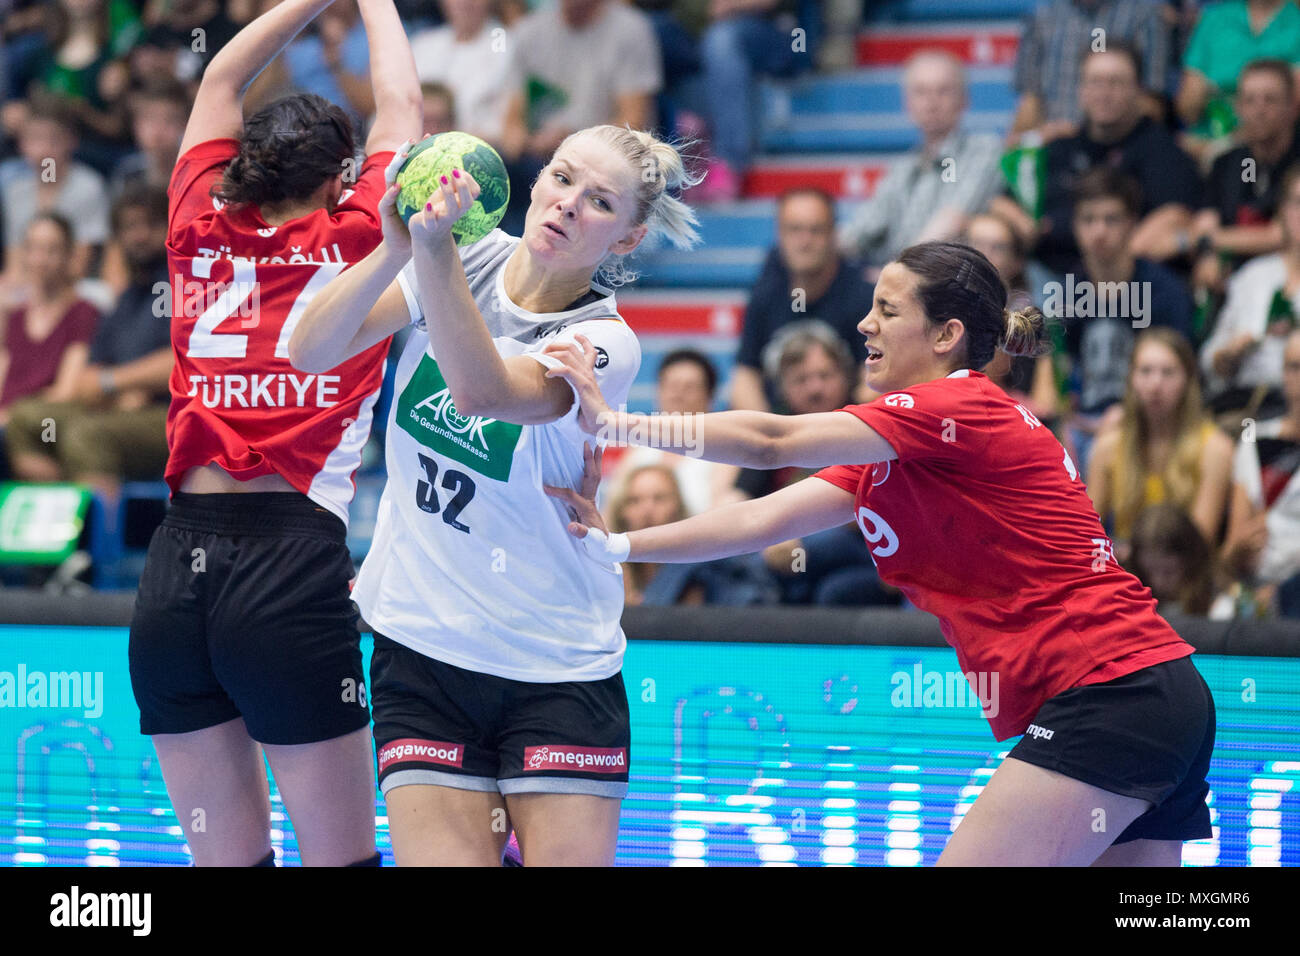 Gummersbach, Deutschland. 03rd June, 2018. Ewgenija MINEVSKAJA (mi., GER) versus Sibel KAREMEKE (right, TUR) and Beyza Irem TUERKOGLU (Tssrkoglu, TUR), action, fight for the ball, women's handball European Championship qualification, group 6, Germany (GER) - Turkey (TUR) 40:17, on 02.06.2018 in Gummersbach/Germany. | usage worldwide Credit: dpa/Alamy Live News Stock Photo